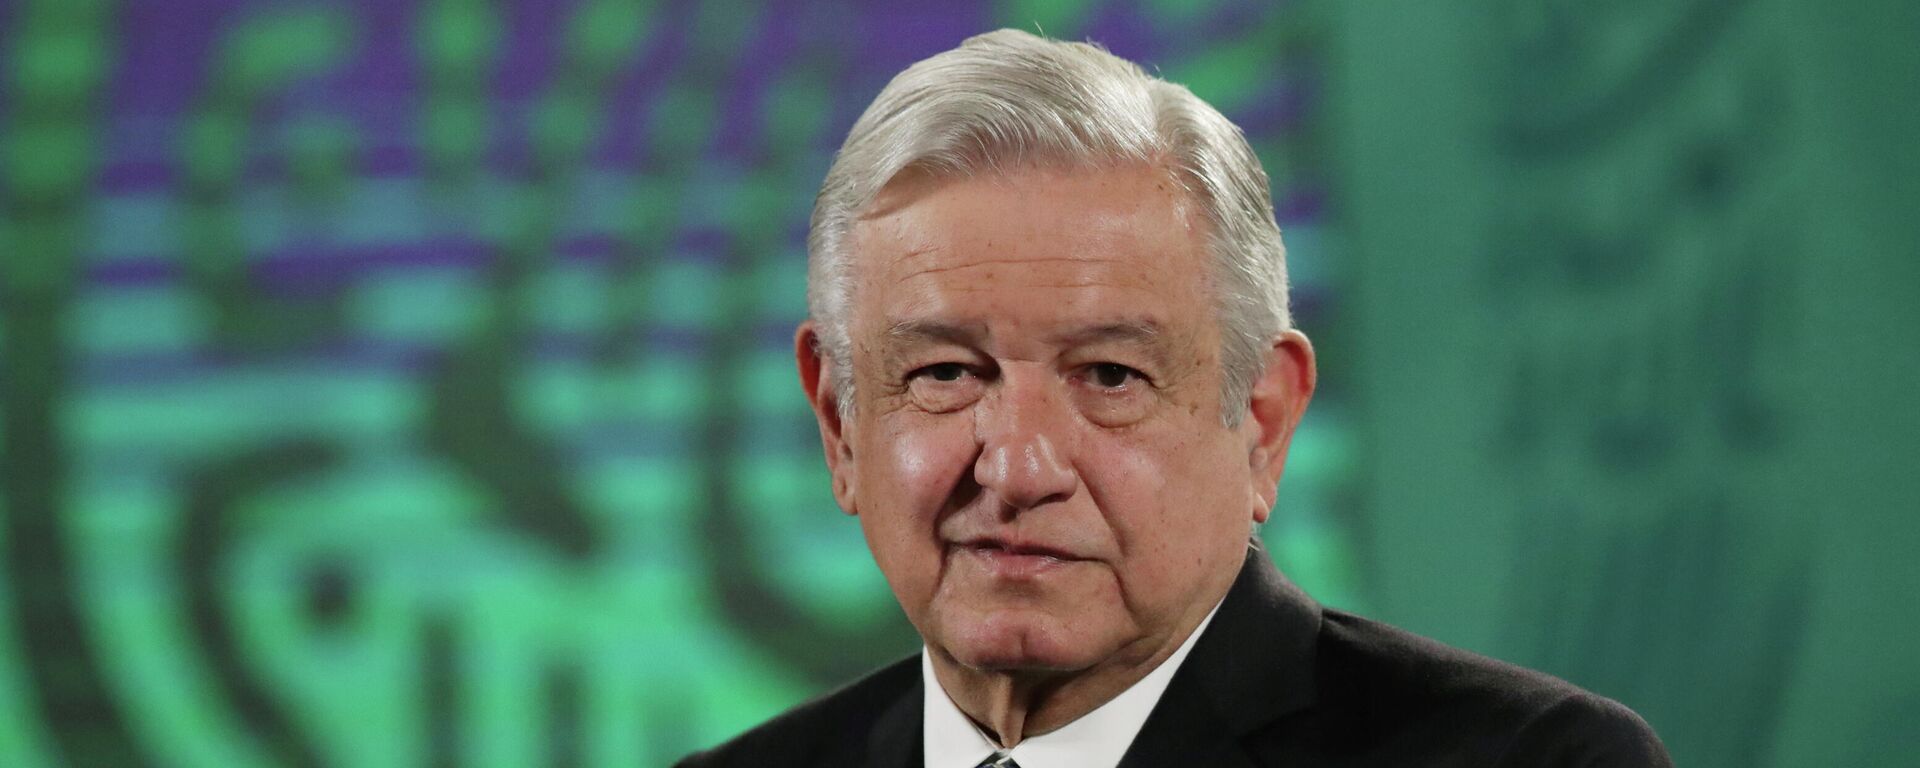 Andrés Manuel López Obrador, el presidente de México  - Sputnik Mundo, 1920, 05.05.2021